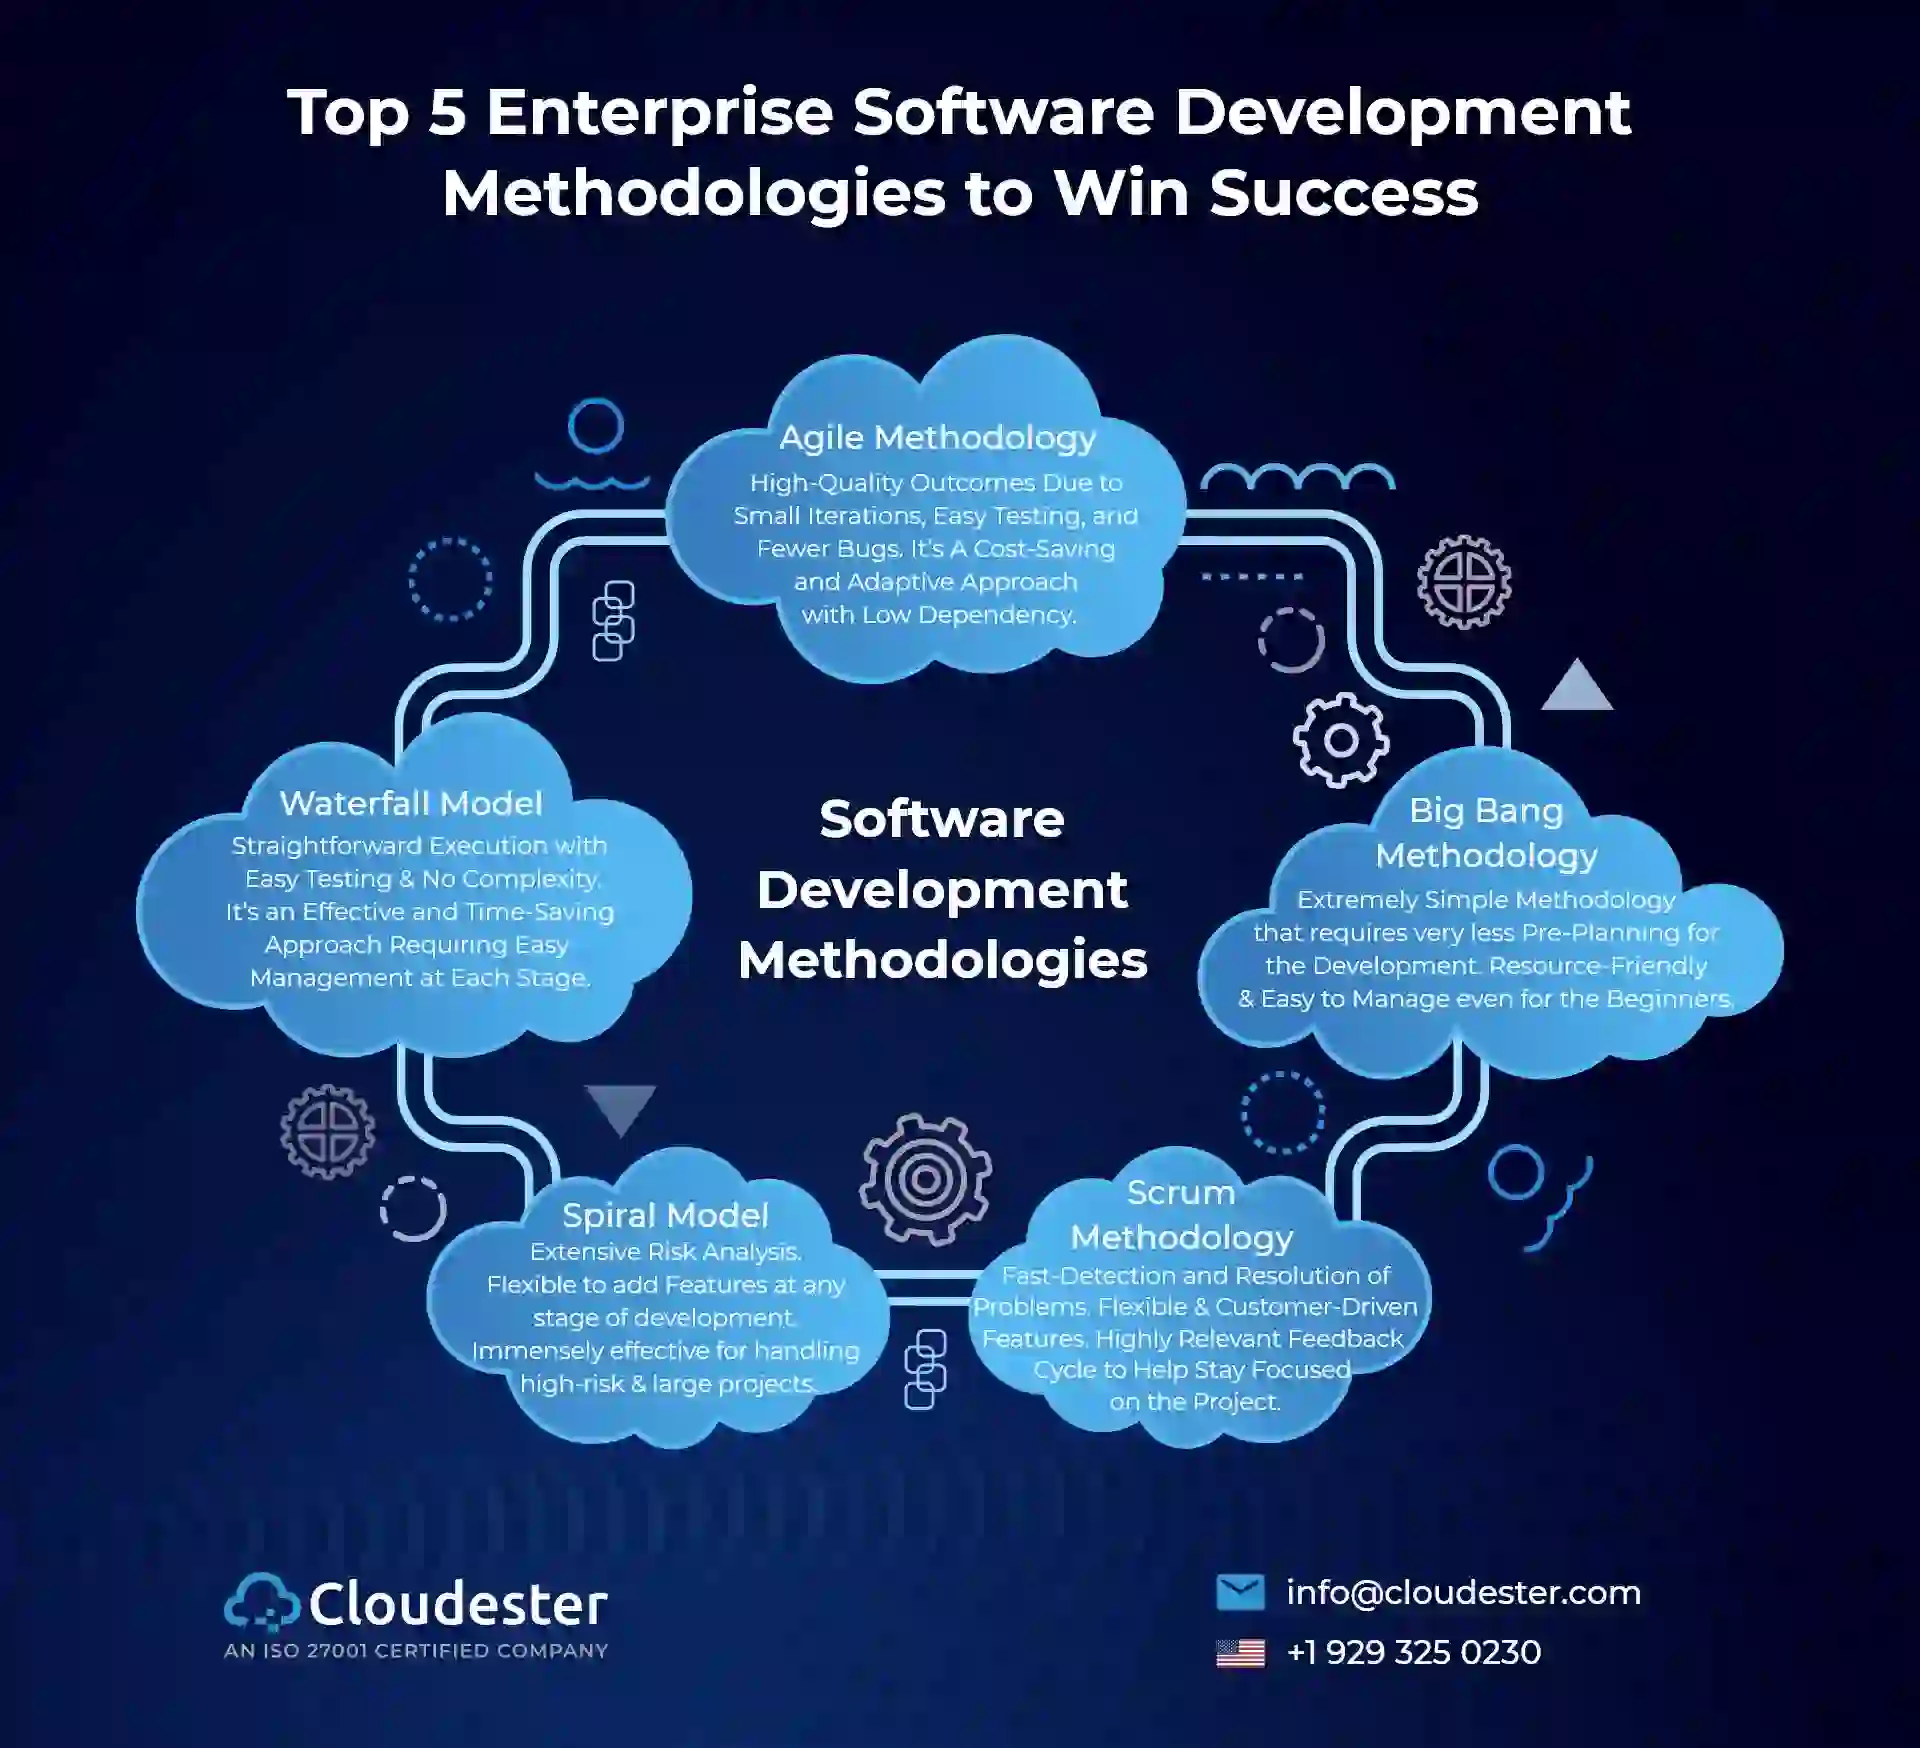 Top 5 Enterprise Software Development Methodologies to Win Success